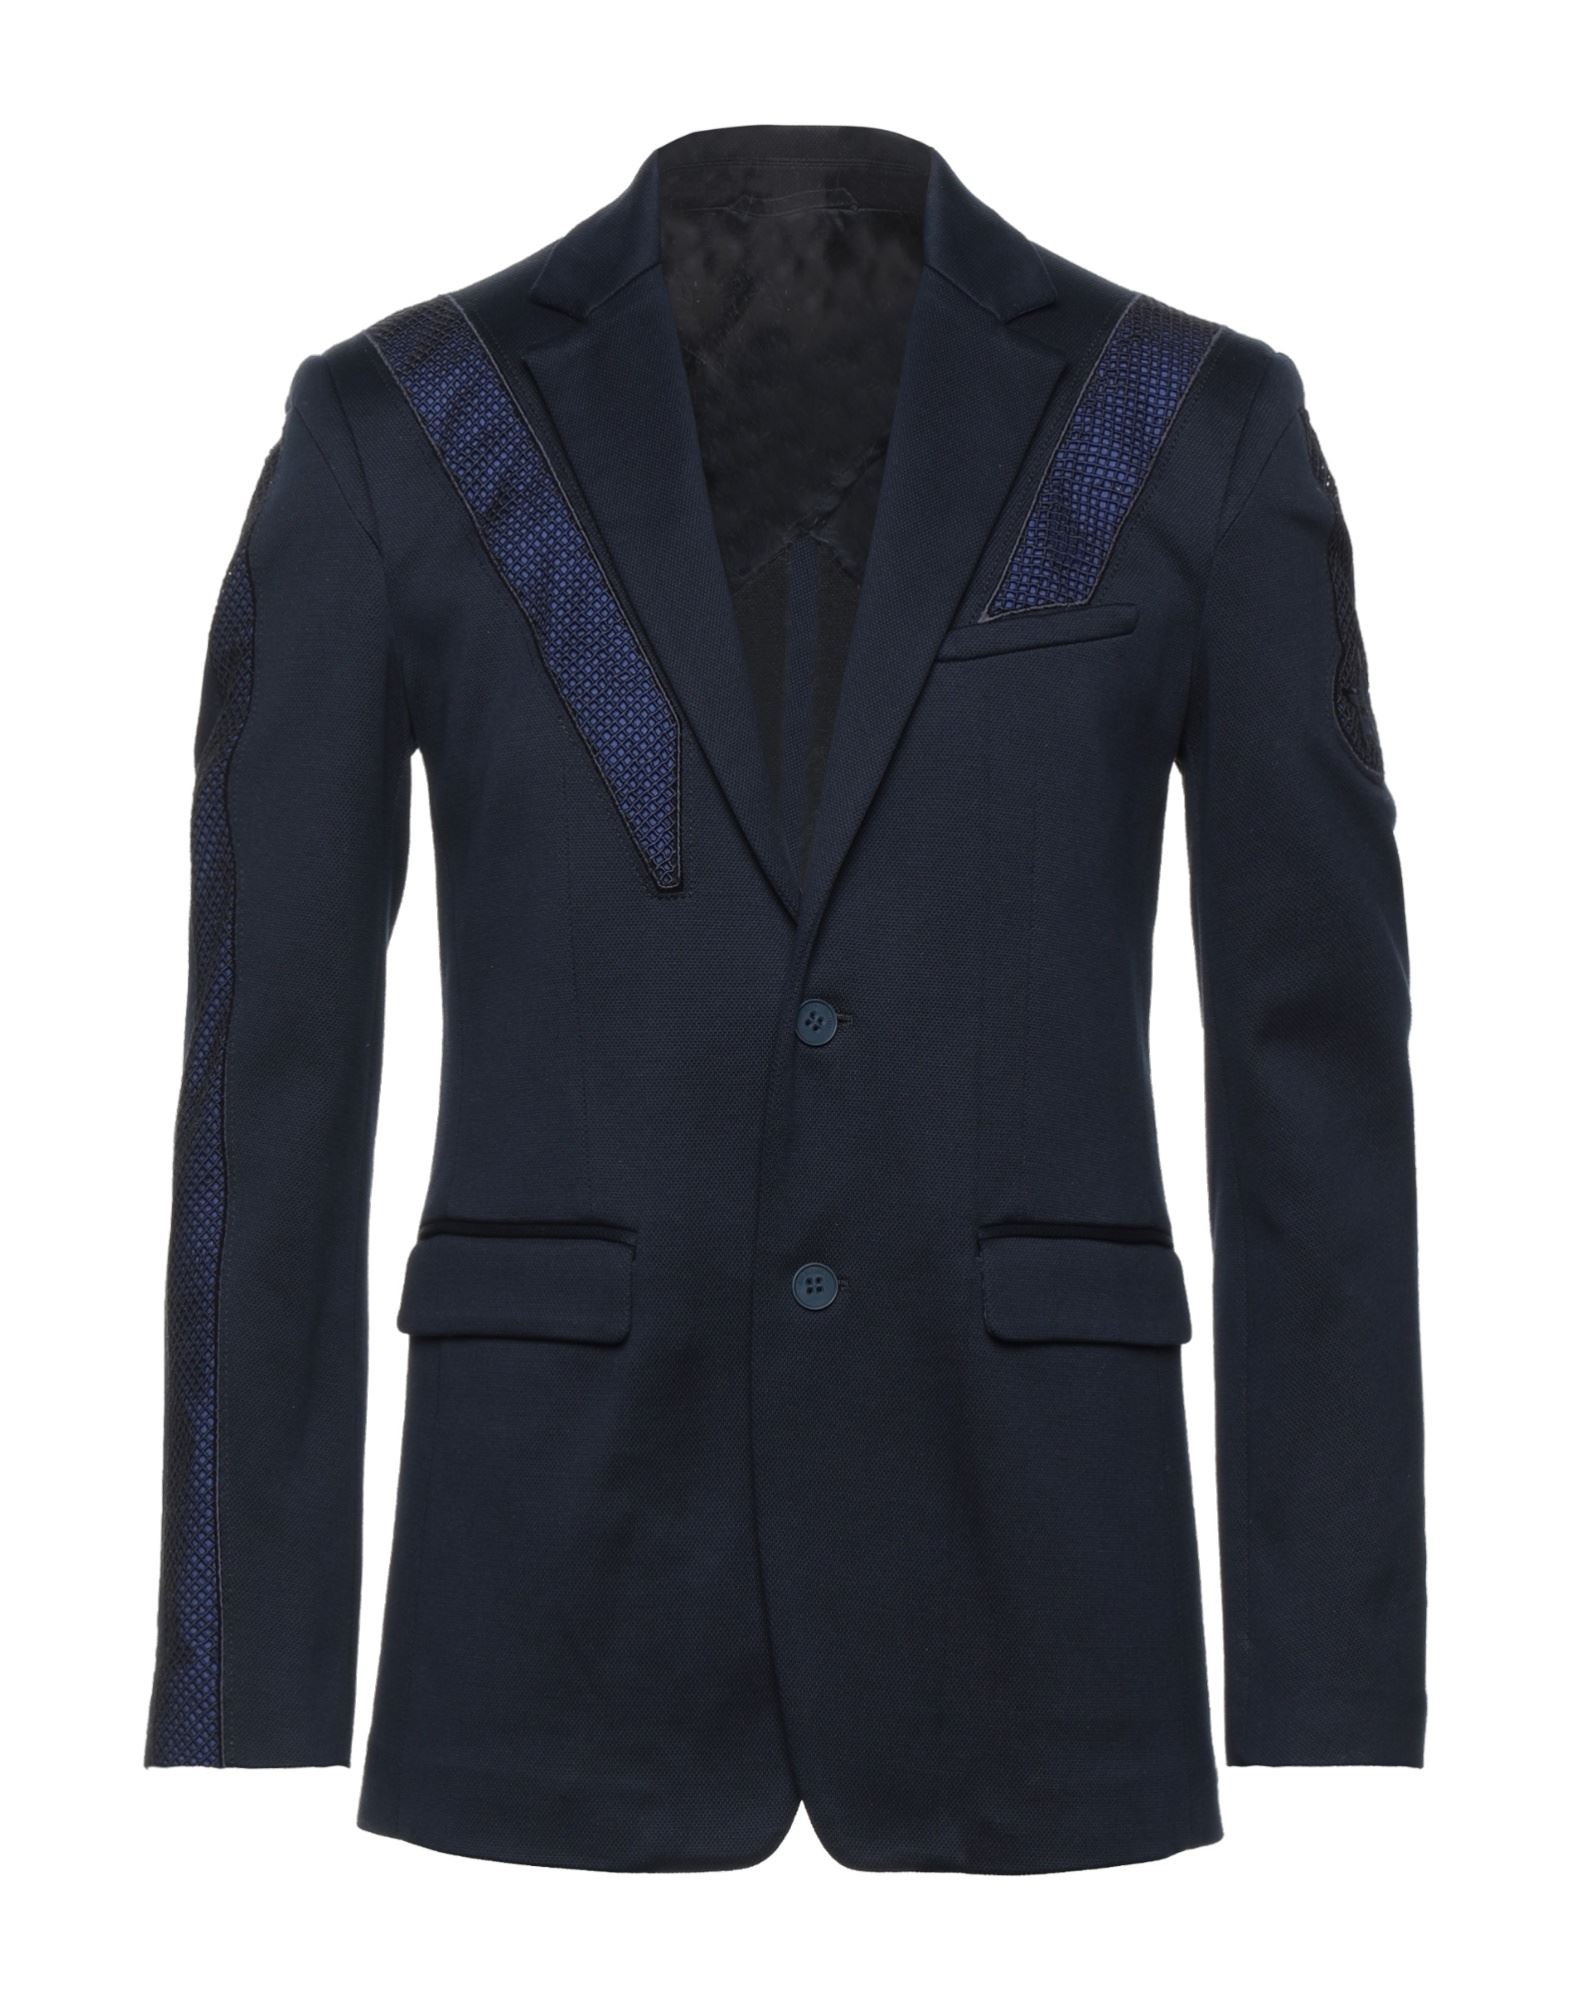 DIRK BIKKEMBERGS Suit jackets